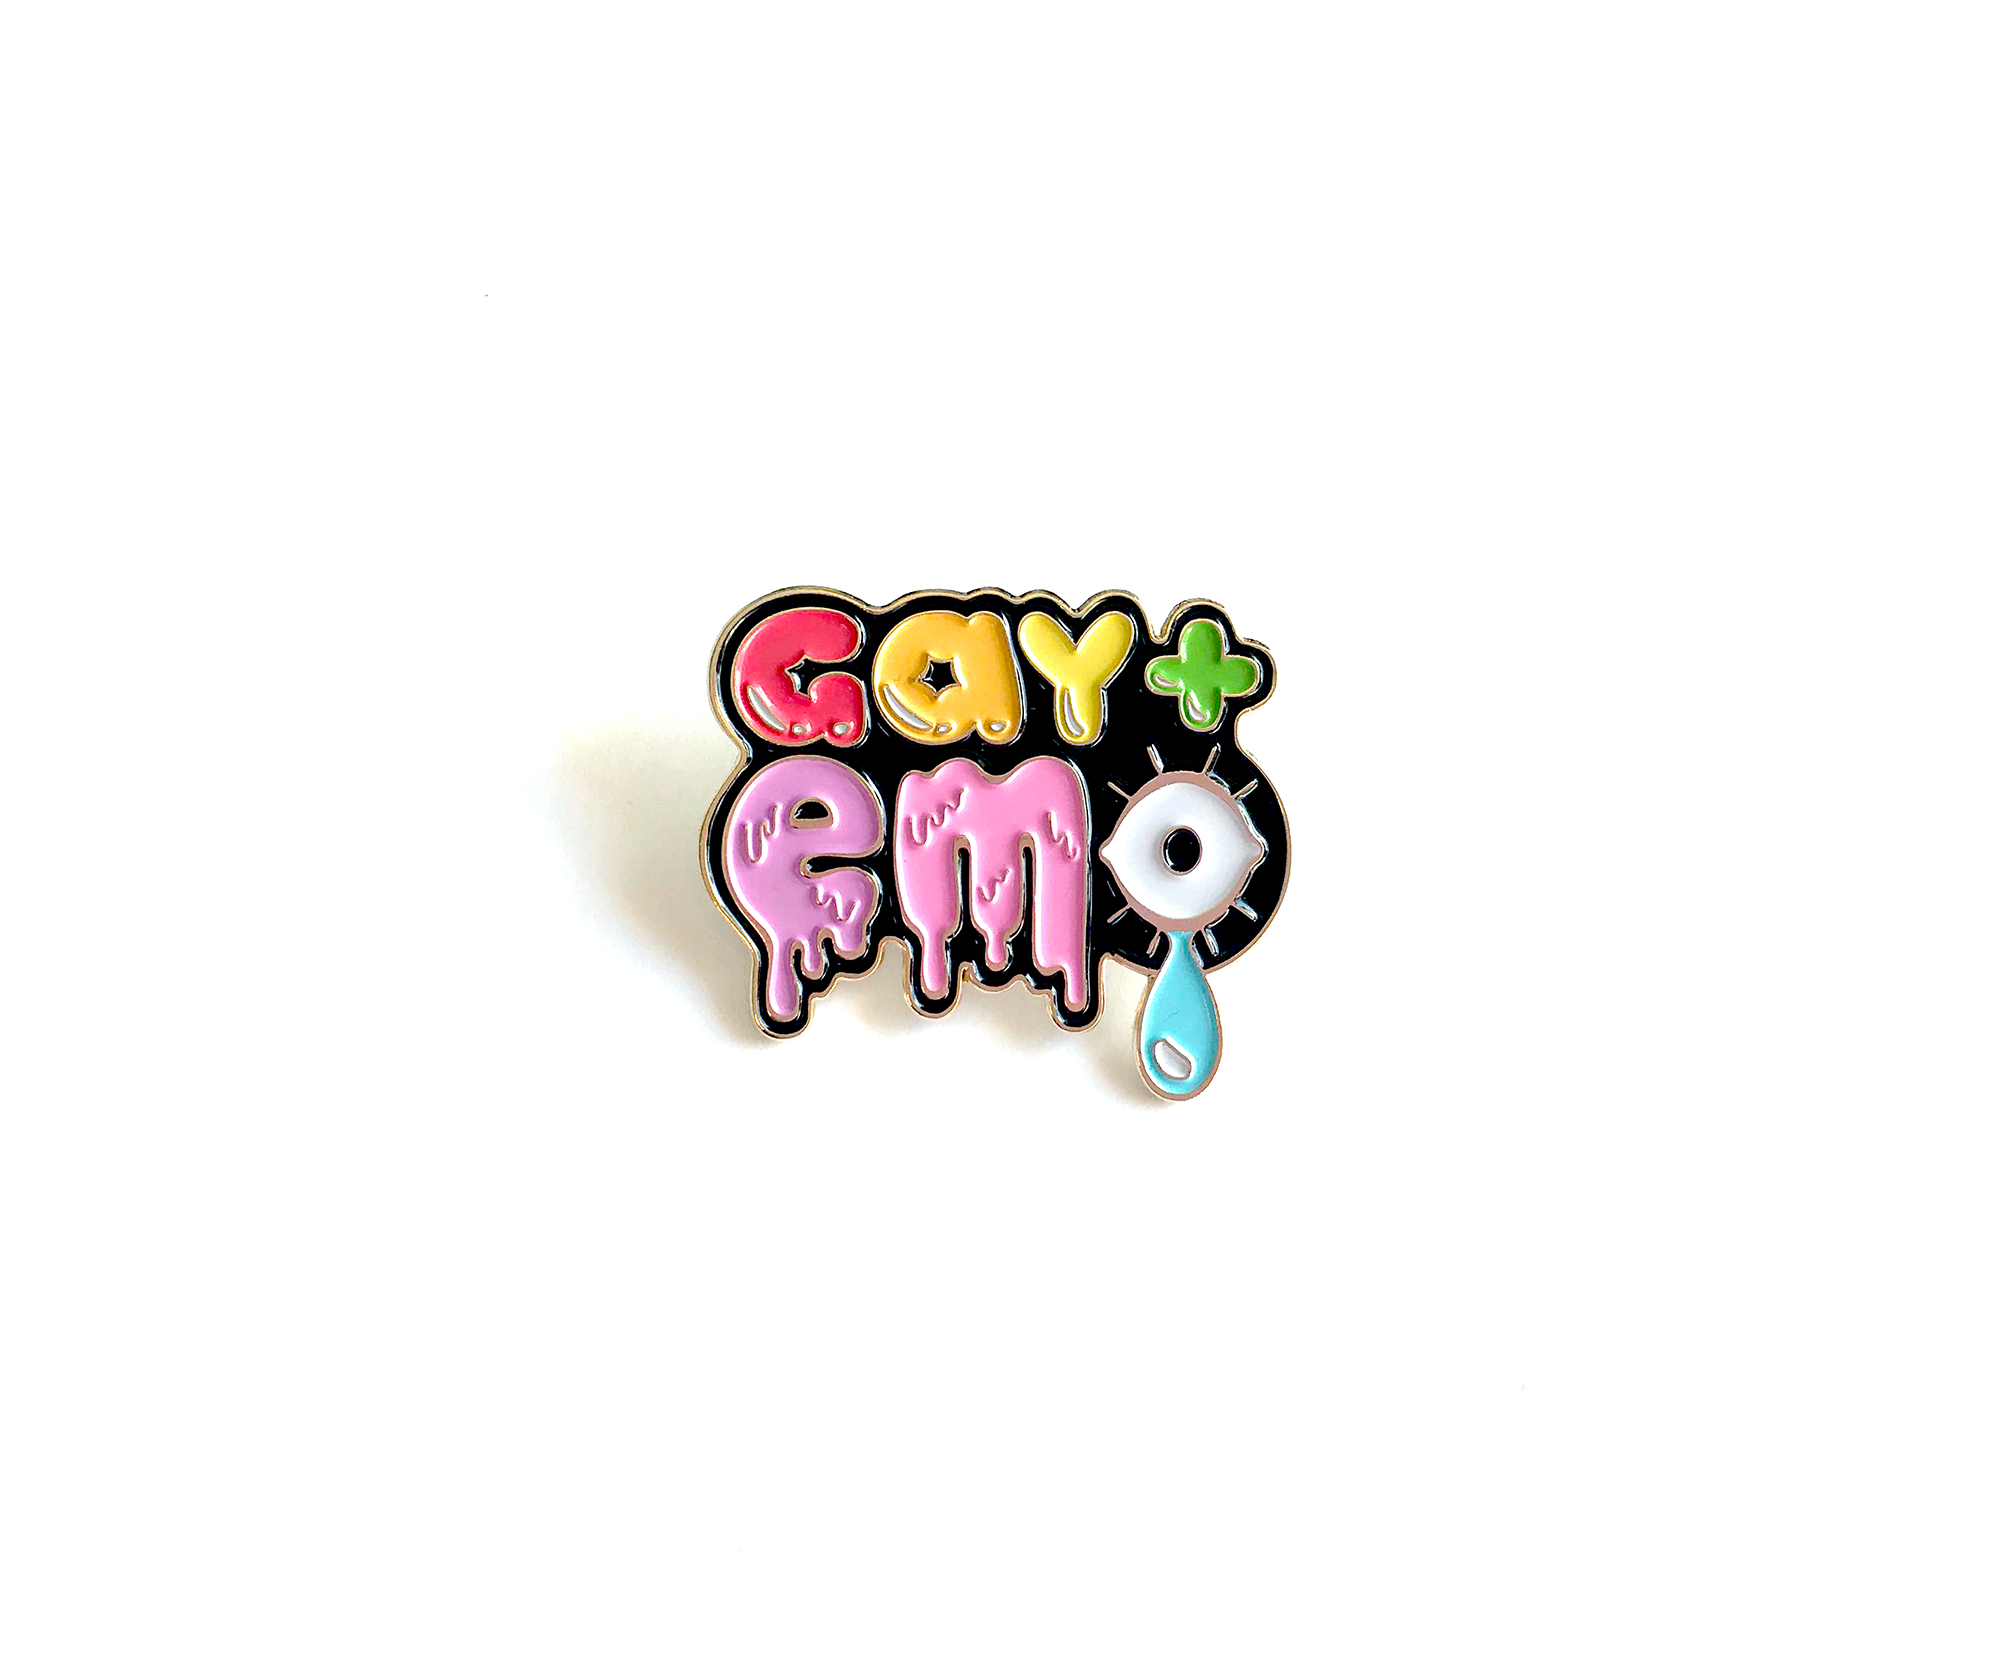 Gay + Emo soft enamel pin